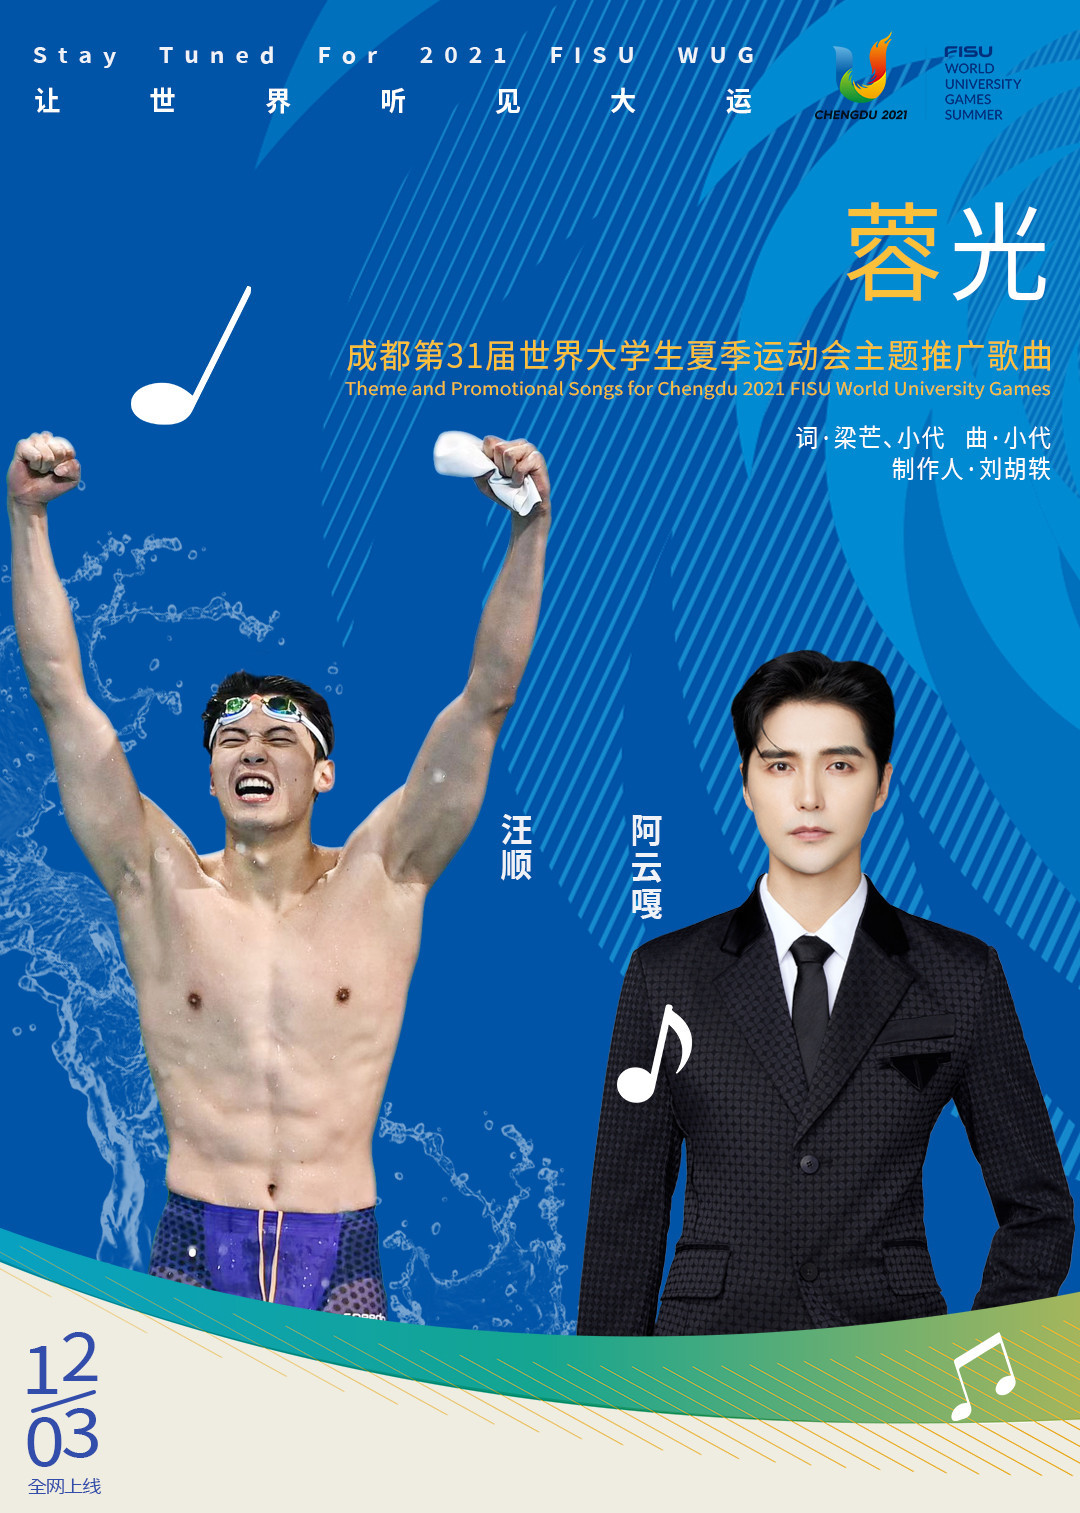 Olympic swimming champion Wang Shun, left, features on he album ©Chengdu 2021